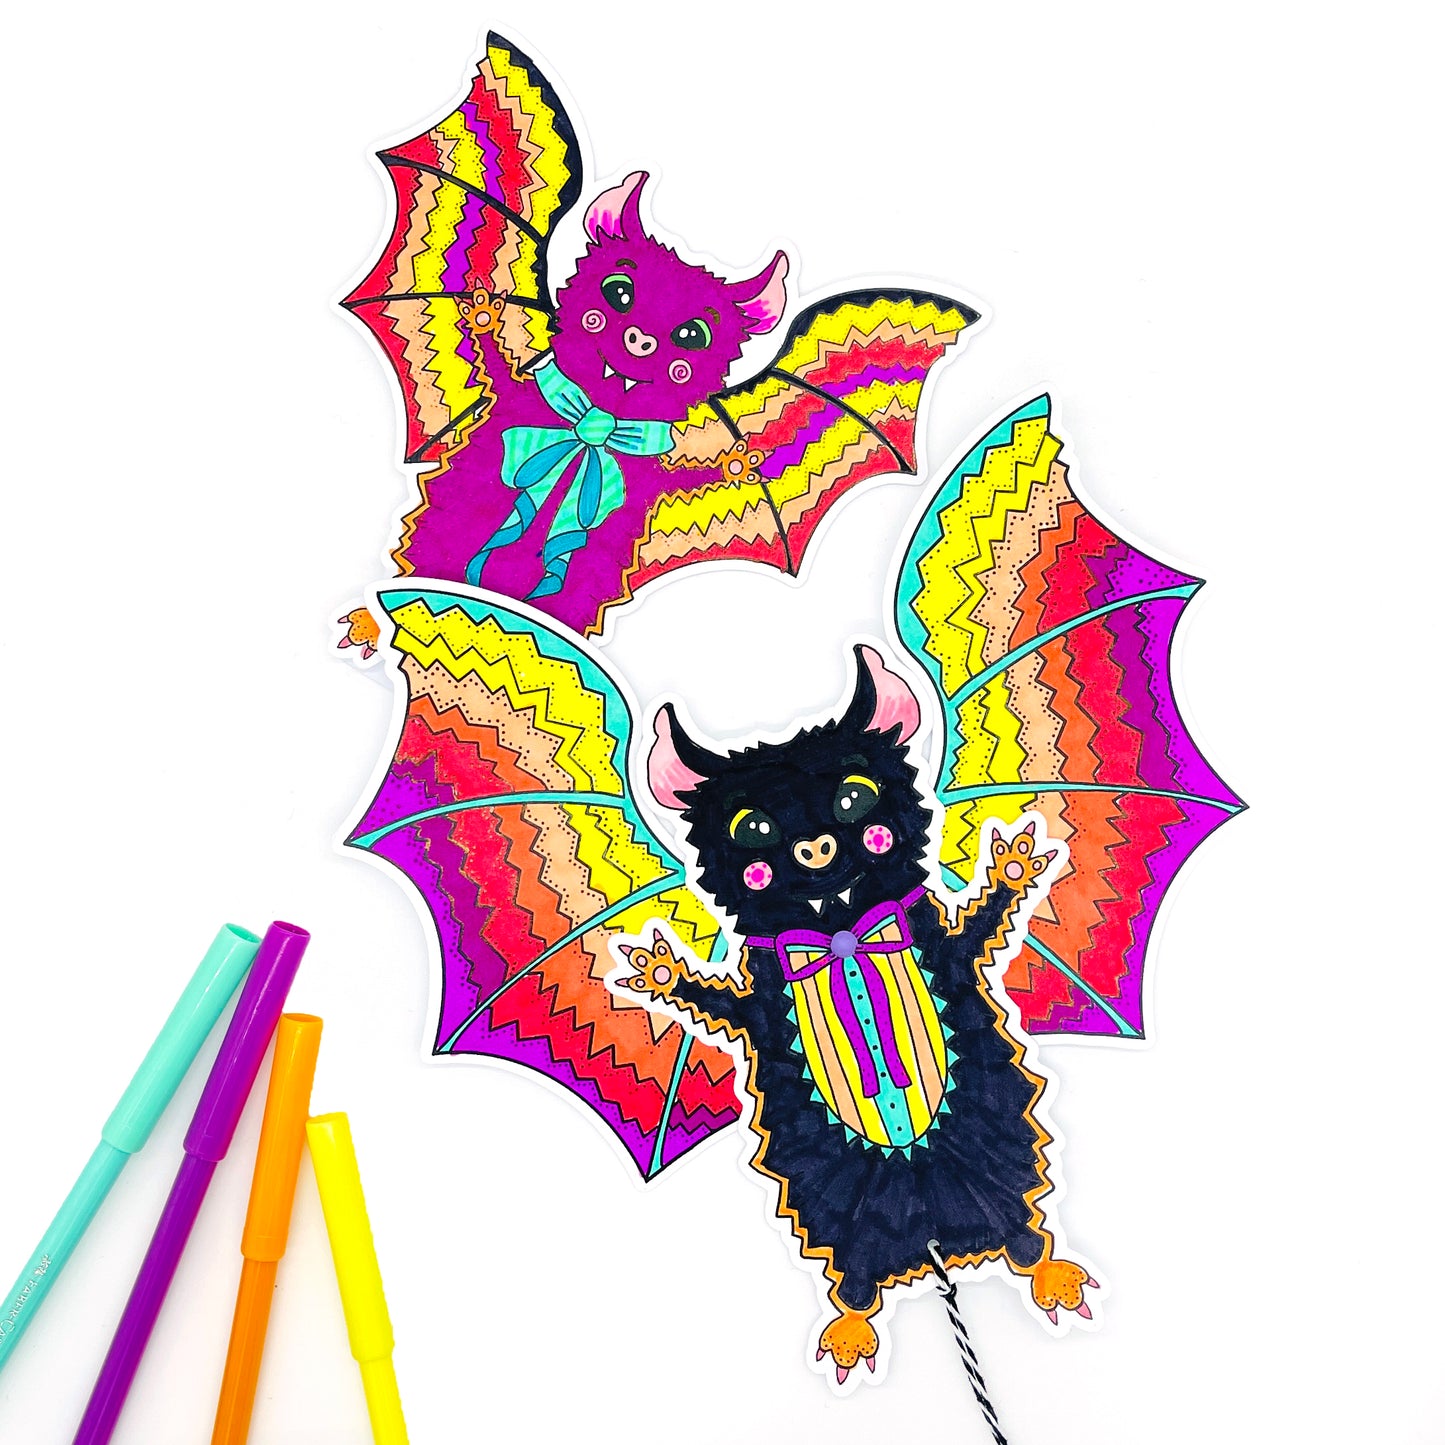 Bat Halloween craft